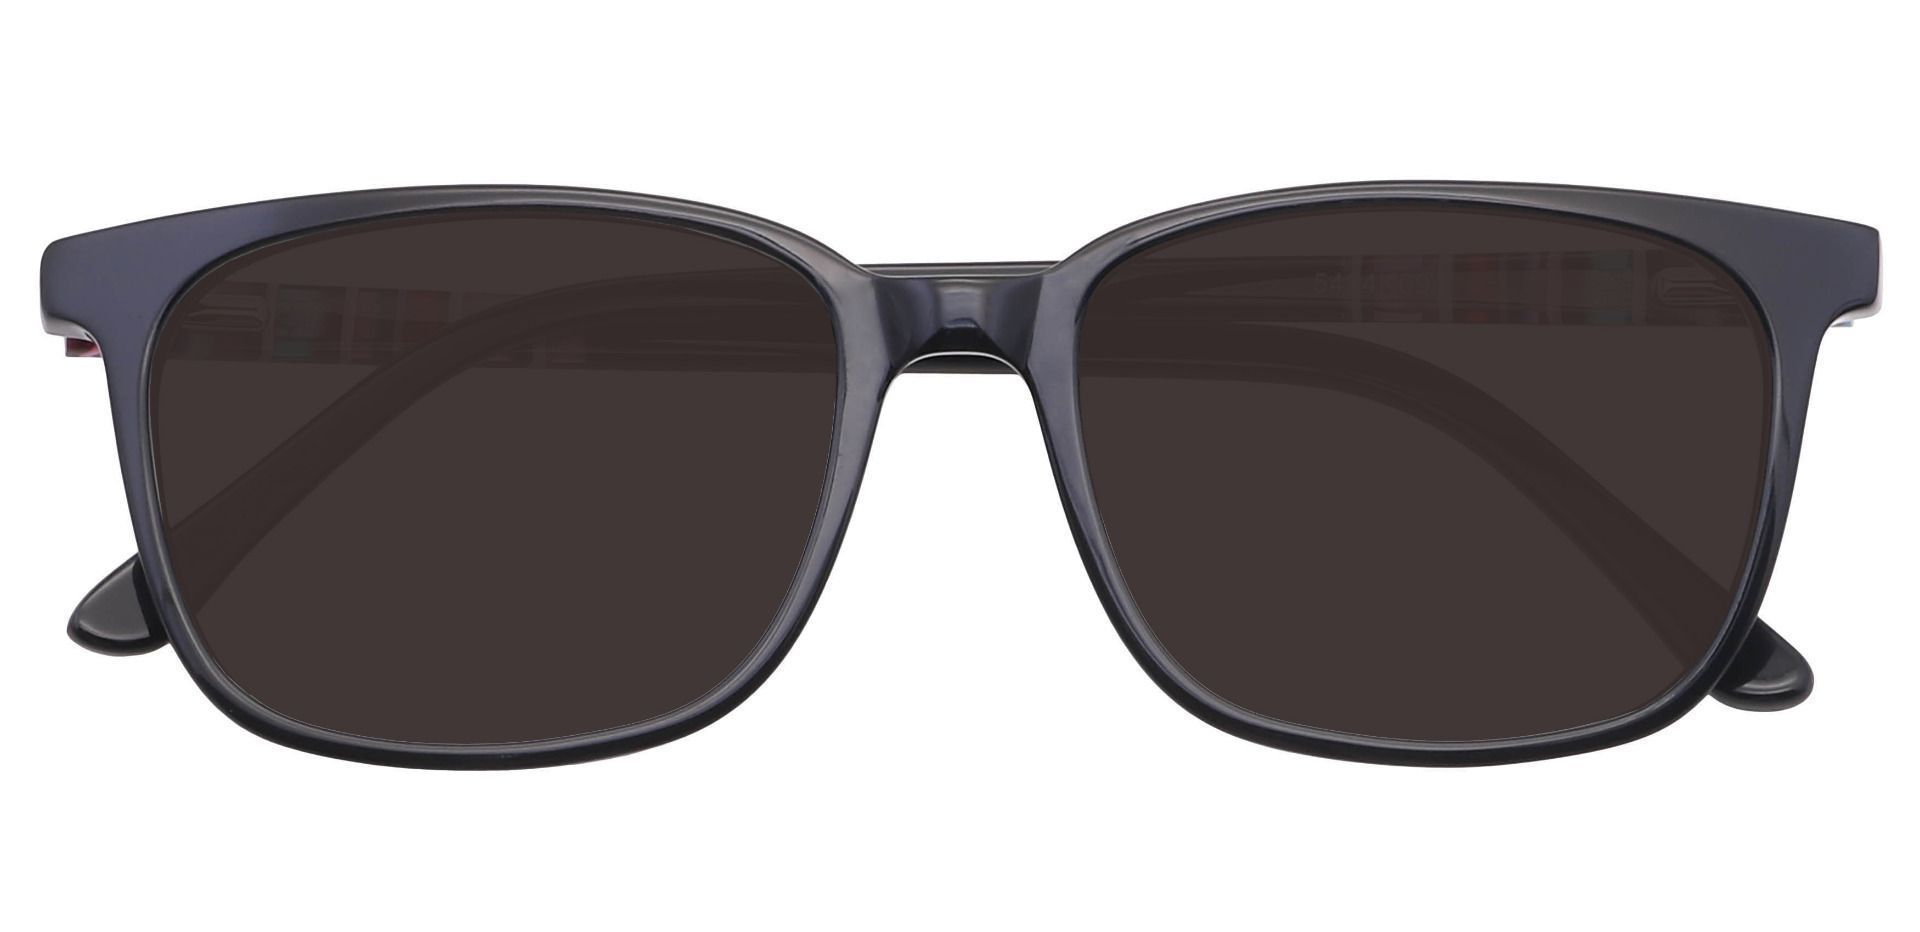 Fern Square Reading Sunglasses - Black Frame With Gray Lenses